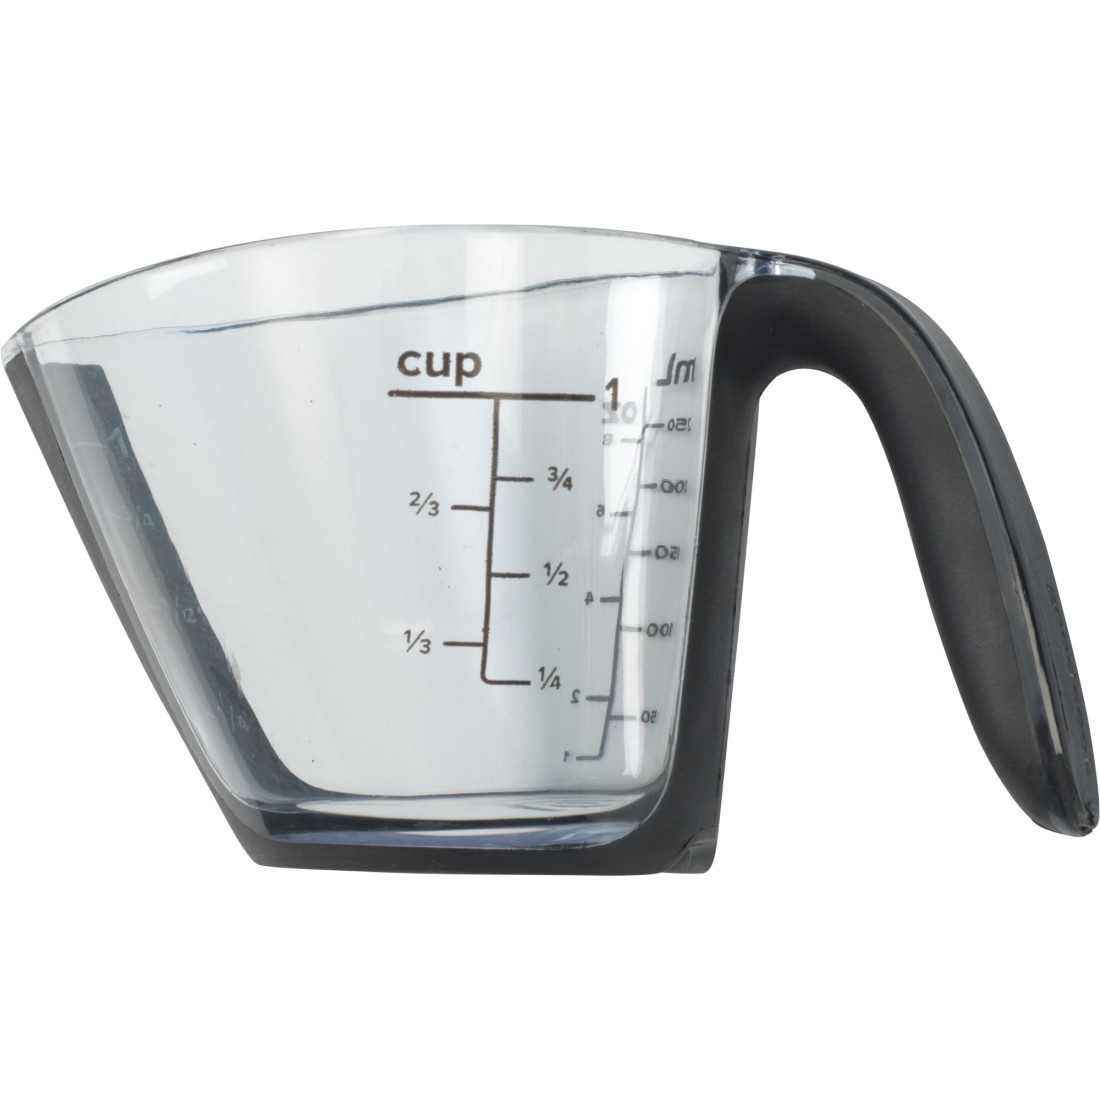 Measuring Cup Use, Easy Read Measuring Cups